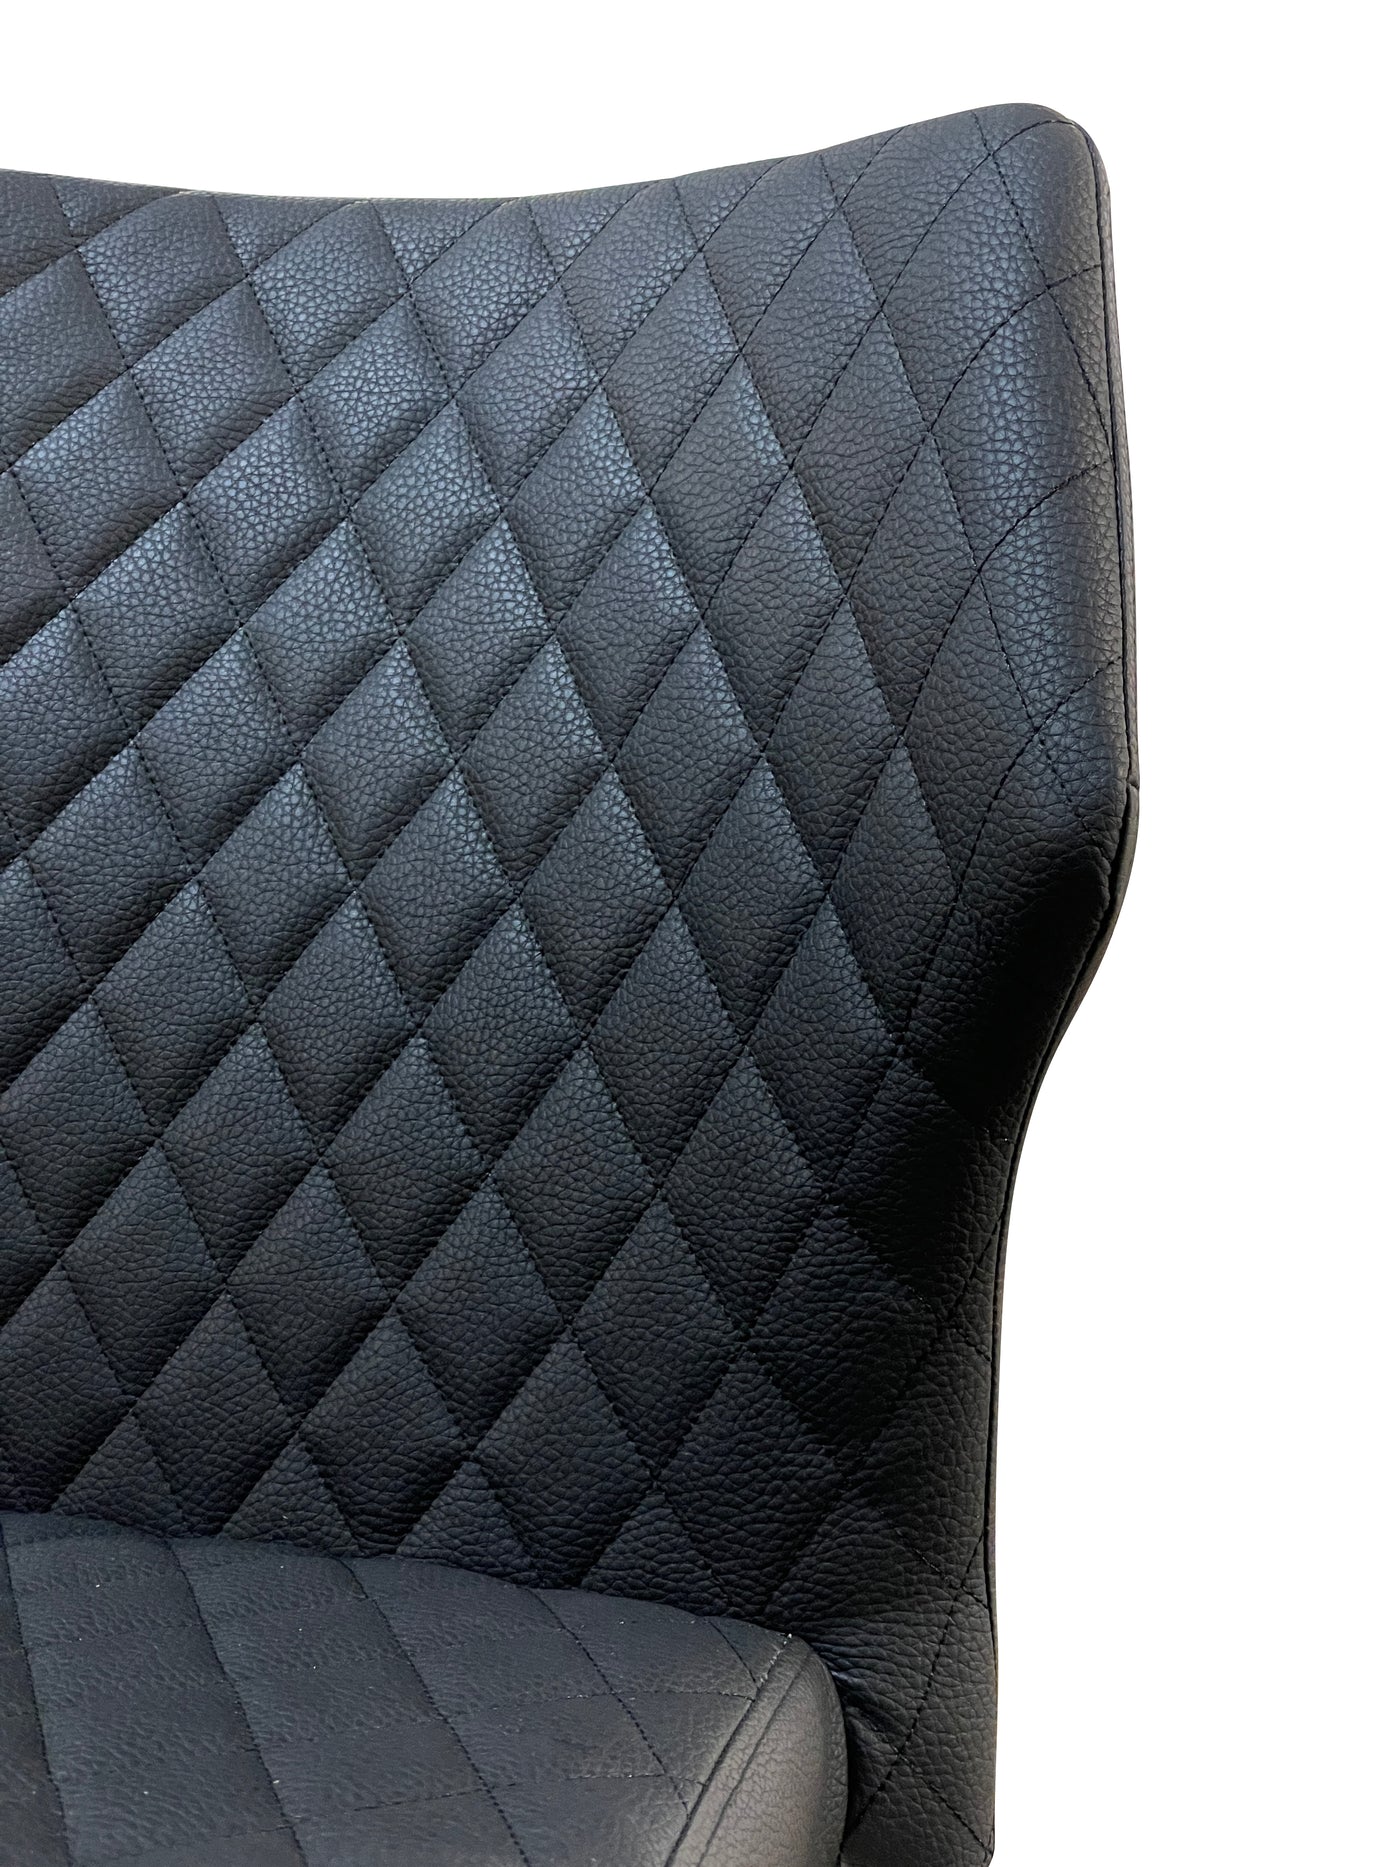 Camilla Dining Chair Black Leather Look - Future Classics Furniture